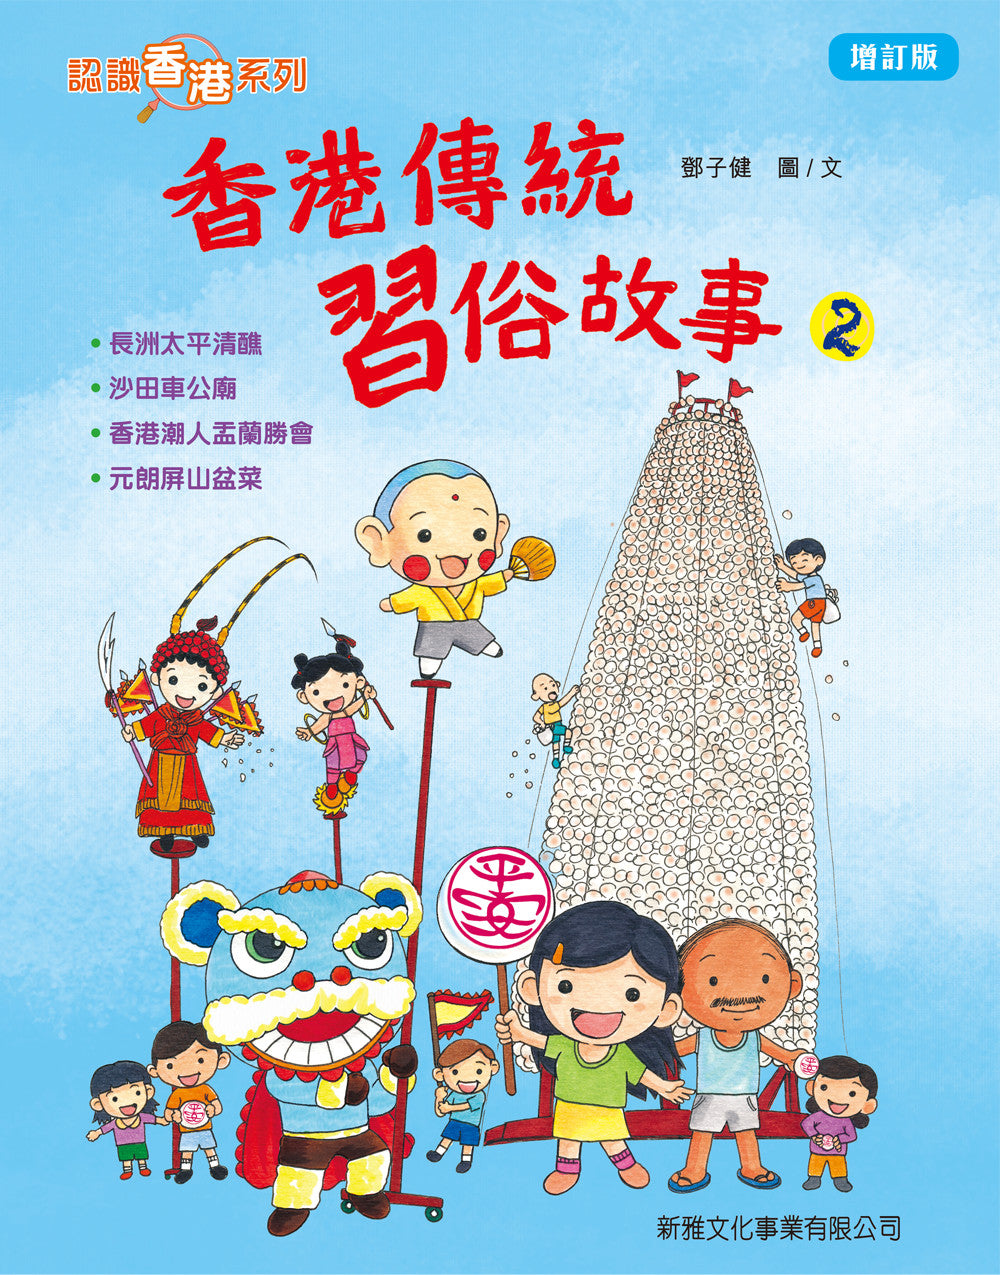 Stories of Traditional Hong Kong Customs #2 • 香港傳統習俗故事#2